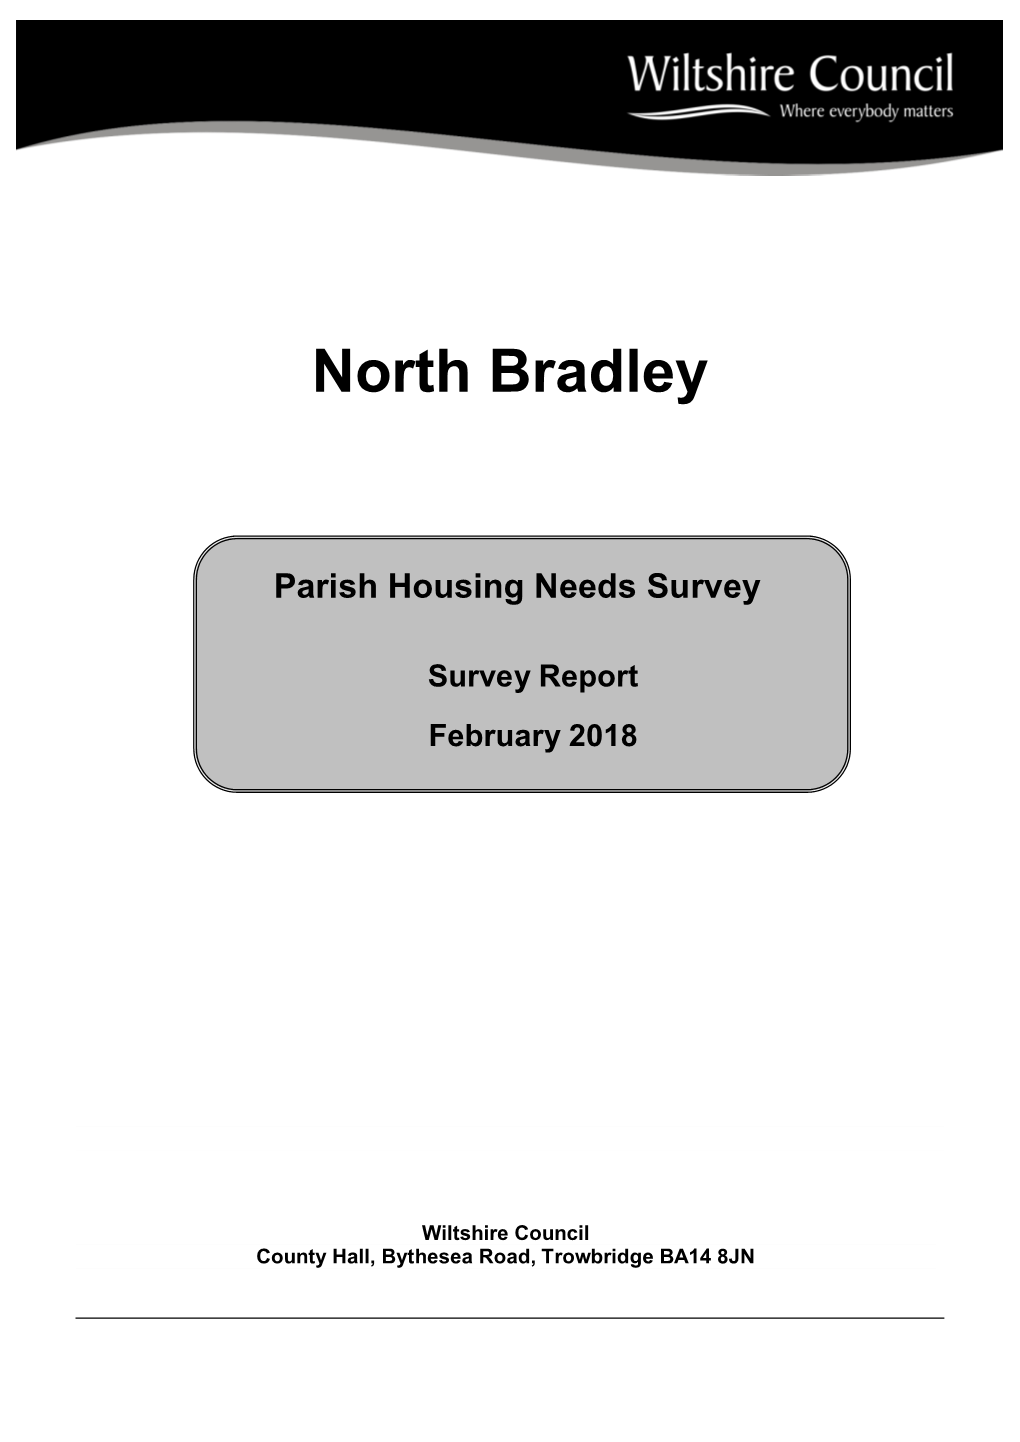 North Bradley Parish Survey Report